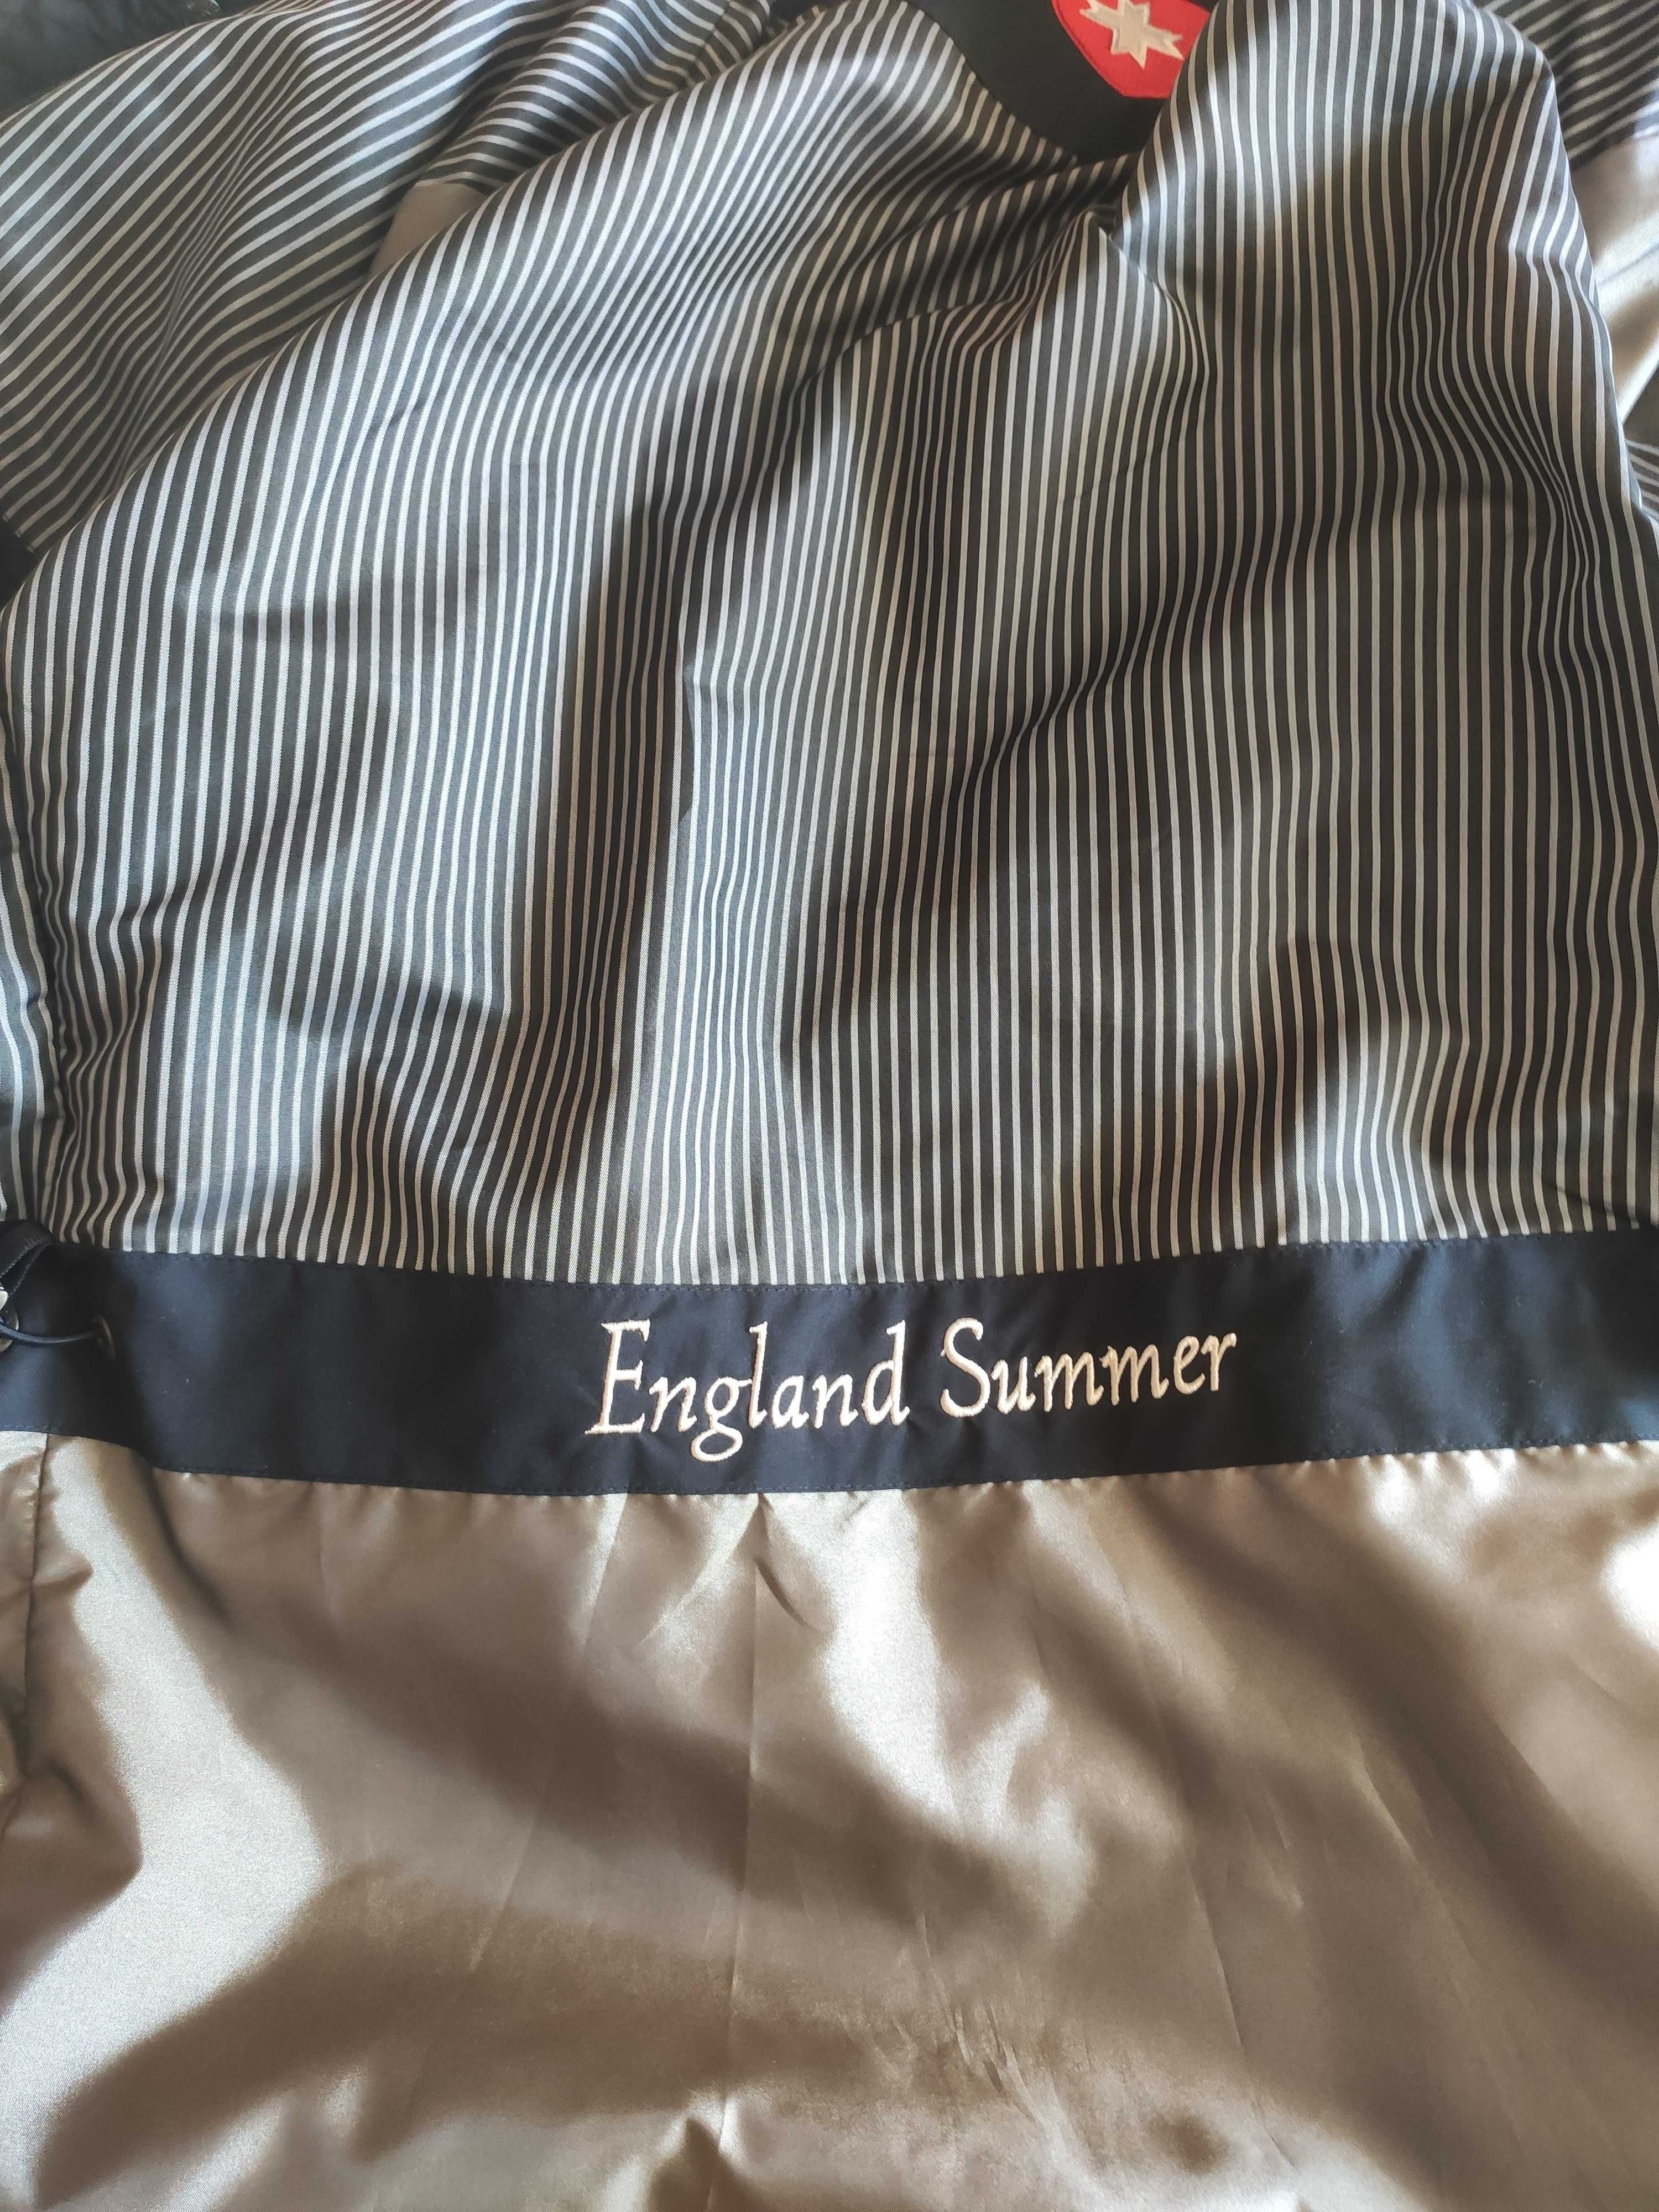 Продам куртку  WELLENSTEYN England Summer.